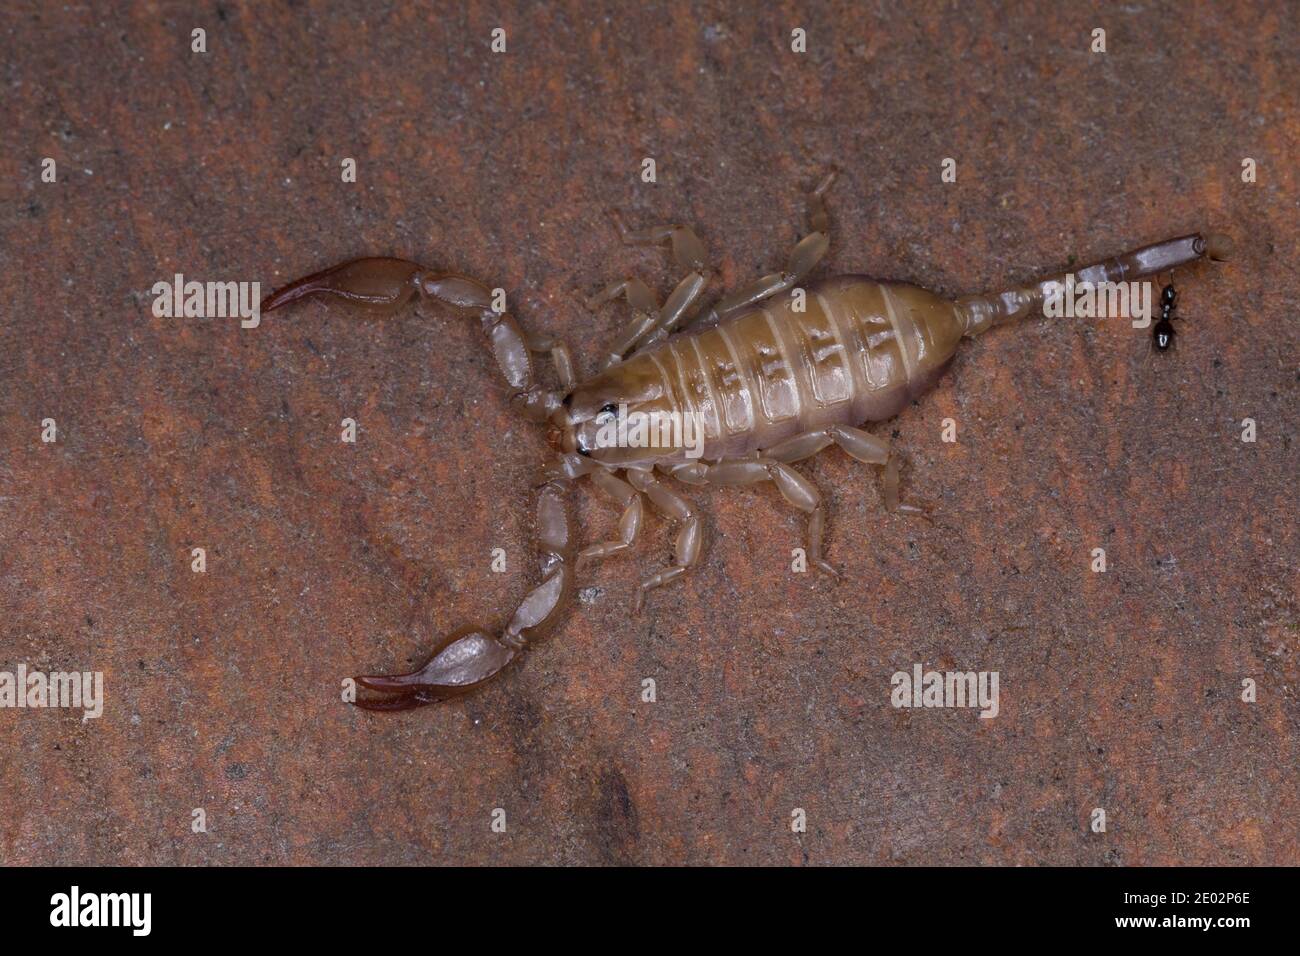 Skorpion, Euscorpius spec., Euscorpius, scorpion, Kroatien, Croatia Stock Photo